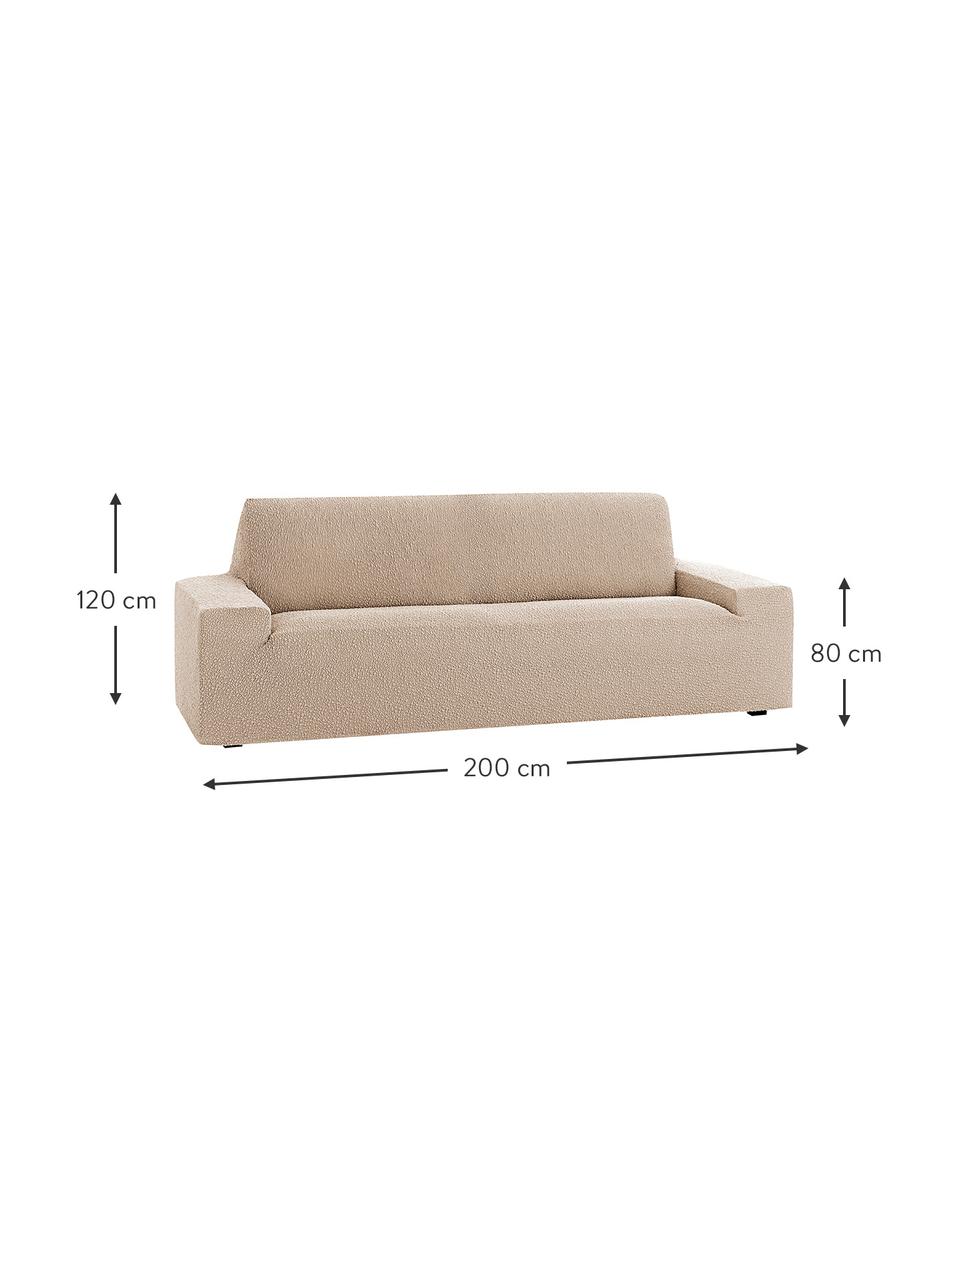 Funda de sofá Roc, 55% poliéster, 35% algodón, 10% elastómero, Beige, An 200 x Al 120 cm